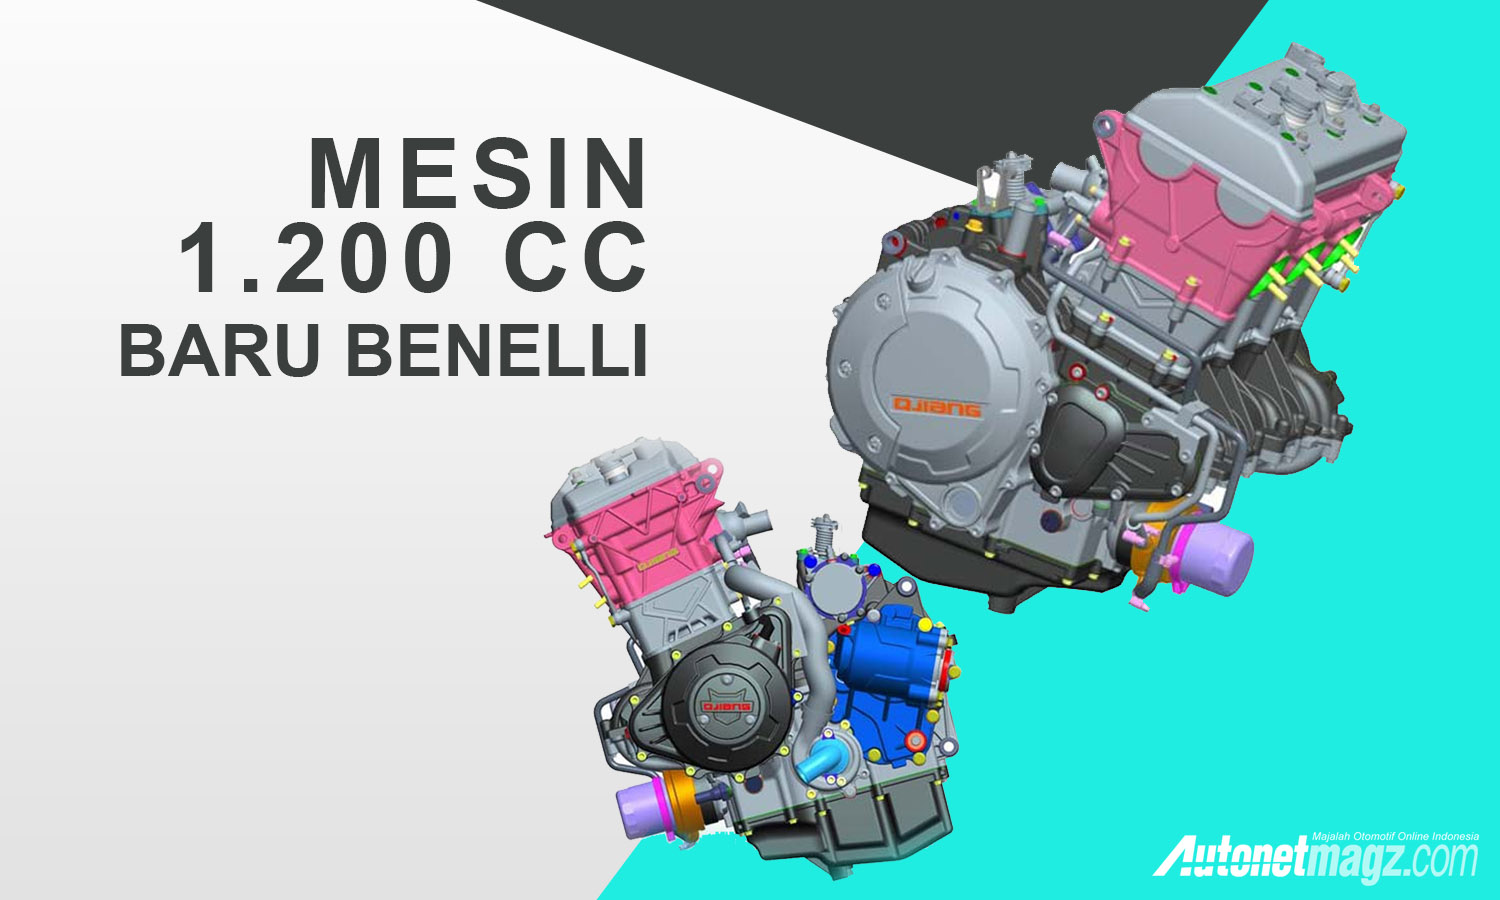 Benelli, mesin benelli 1200 cc: Benelli Produksi Mesin Baru Berkubikasi 1.200 cc